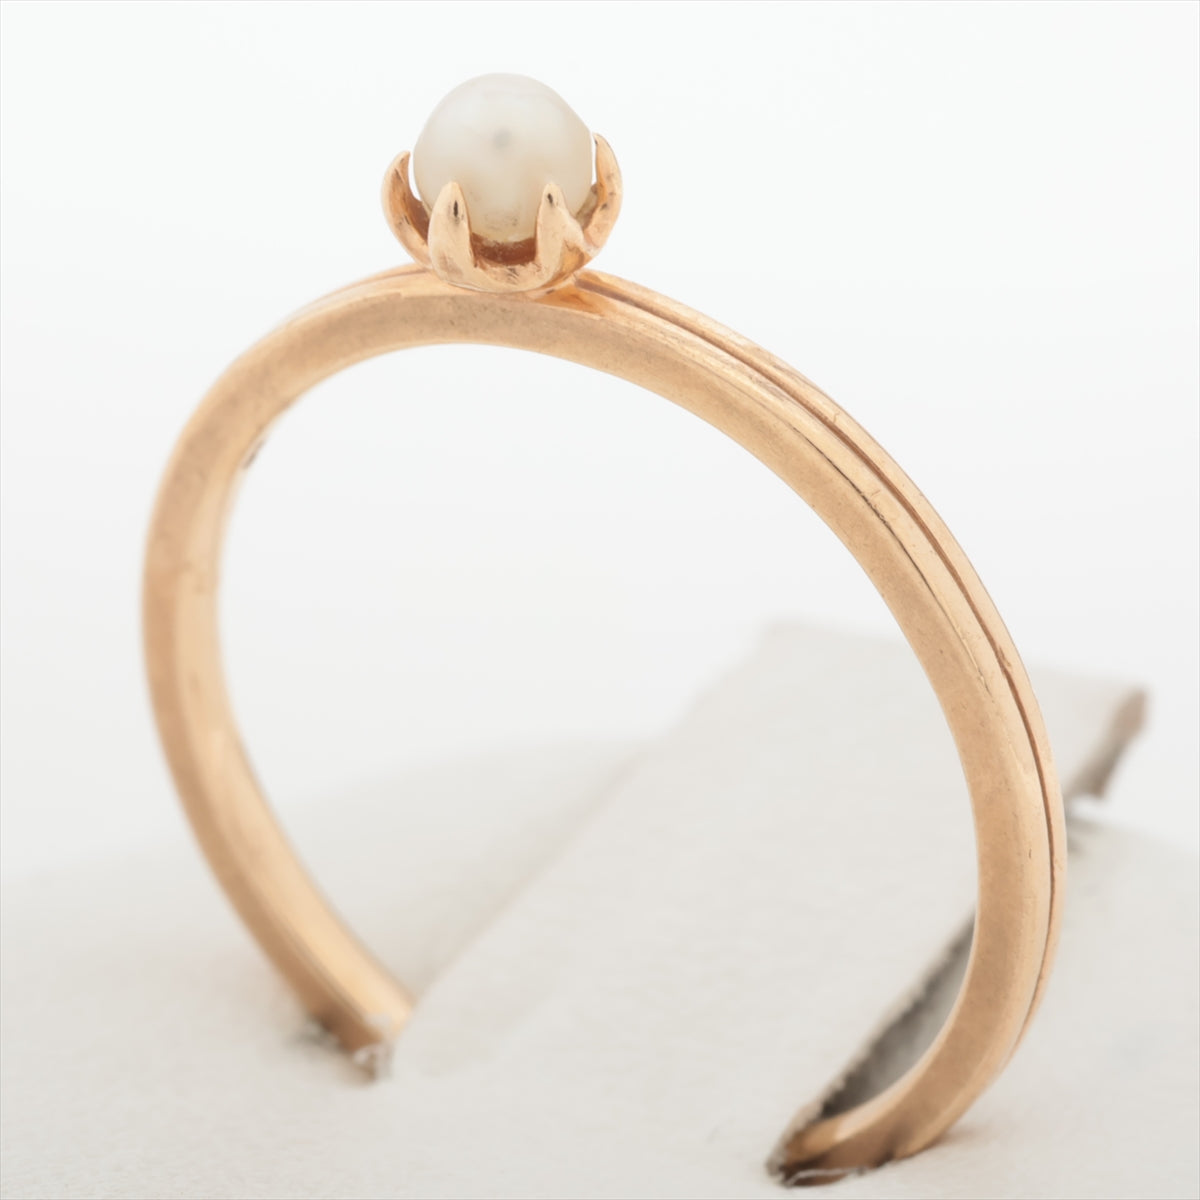 Agat Pearl Ring K10 (PG) 1.3g